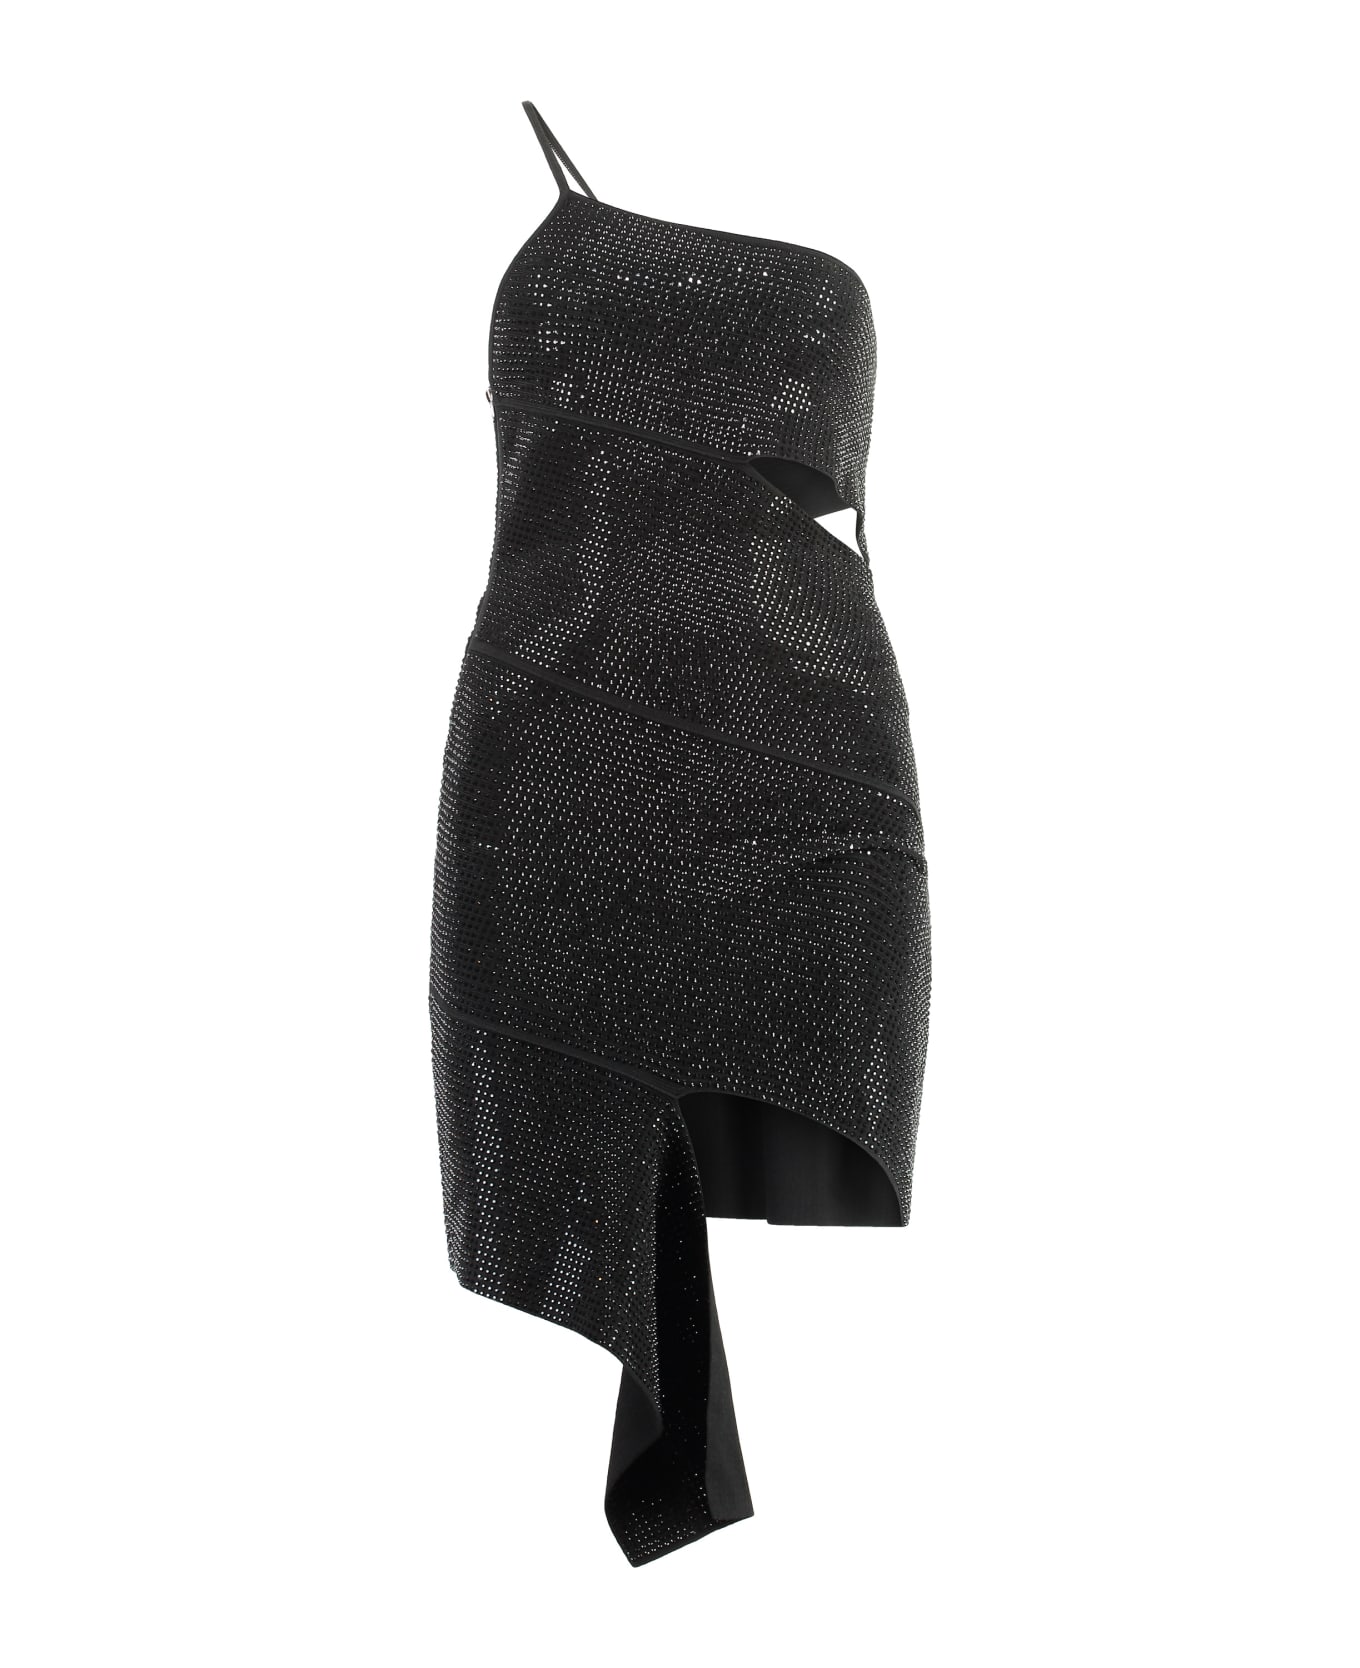 ANDREĀDAMO Rhinestone Mini Dress - black